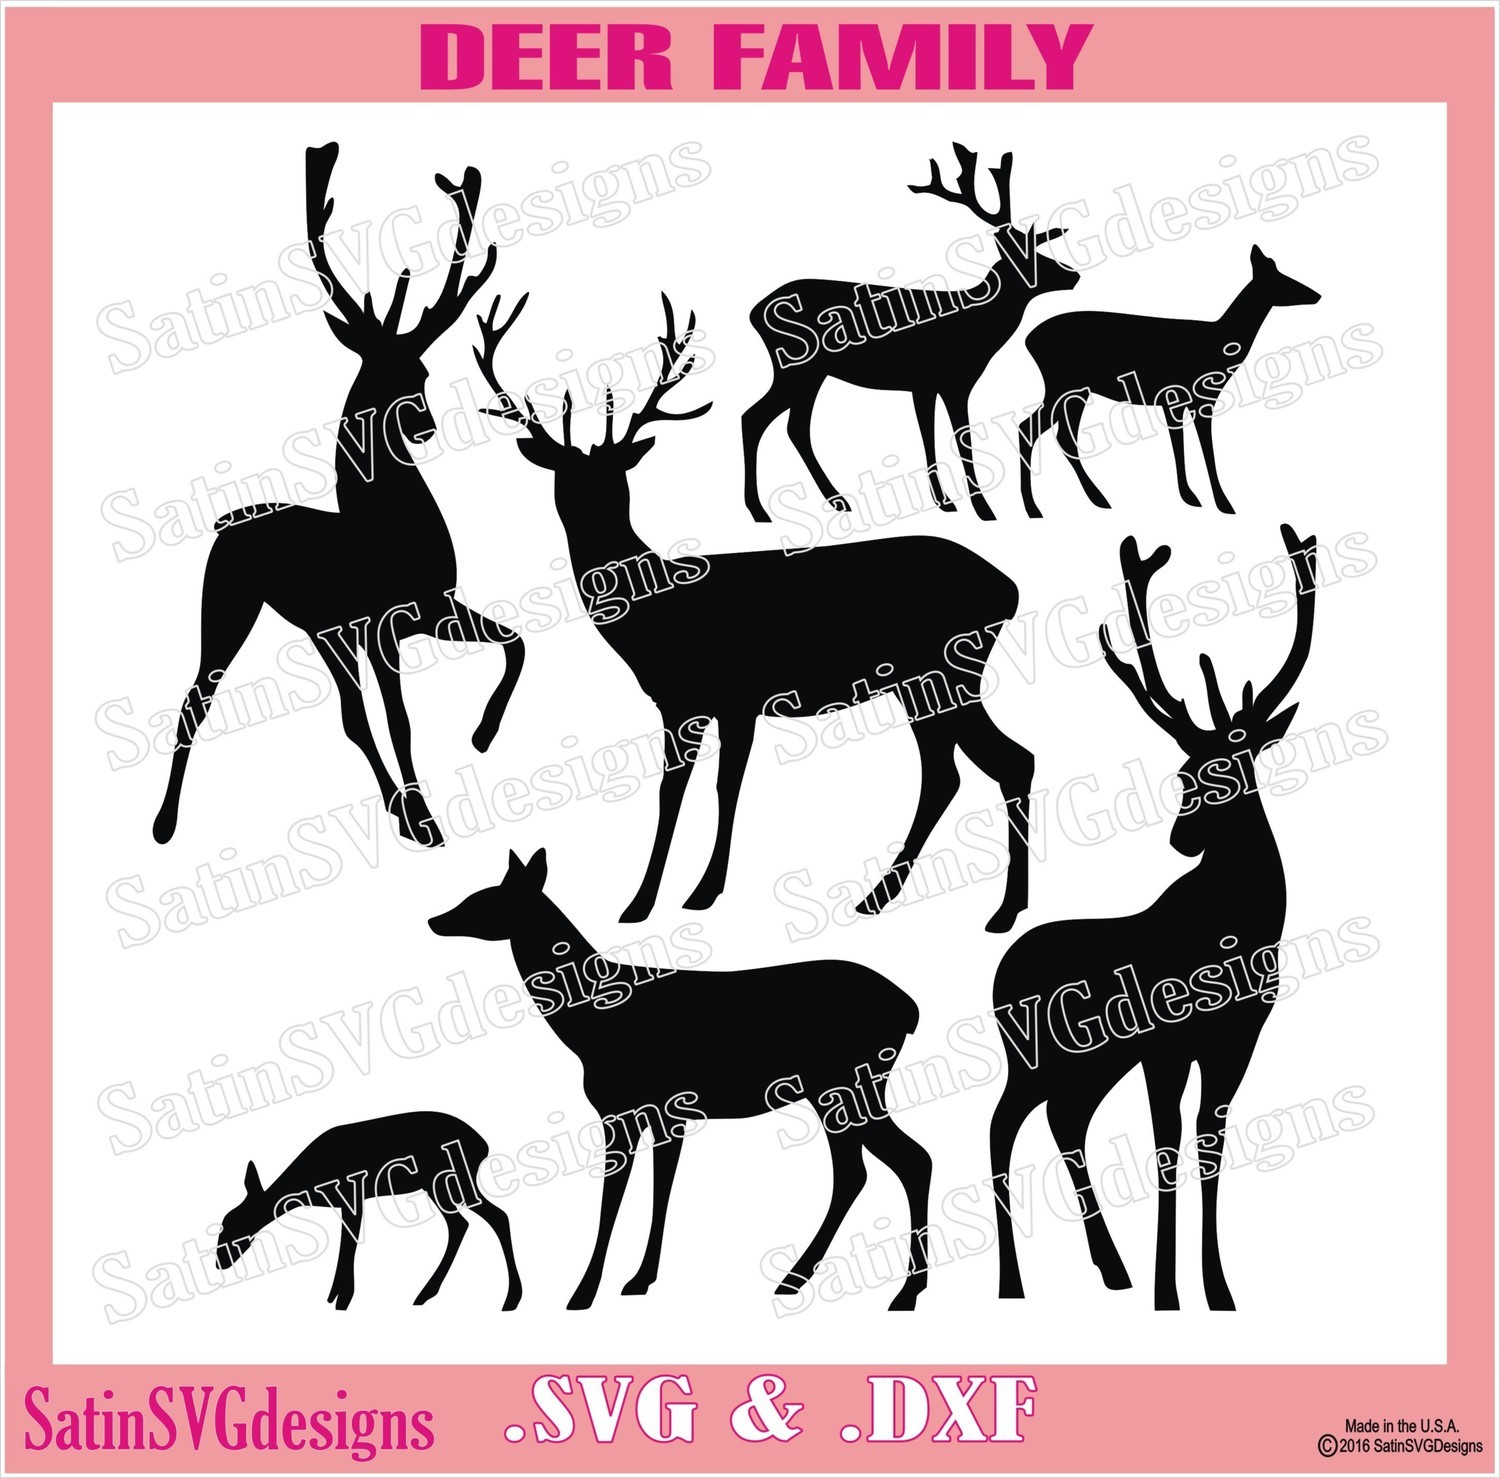 Deer Family Hunting Browning Design SVG Files, Cricut, Silhouette Studio, Digital Cut Files